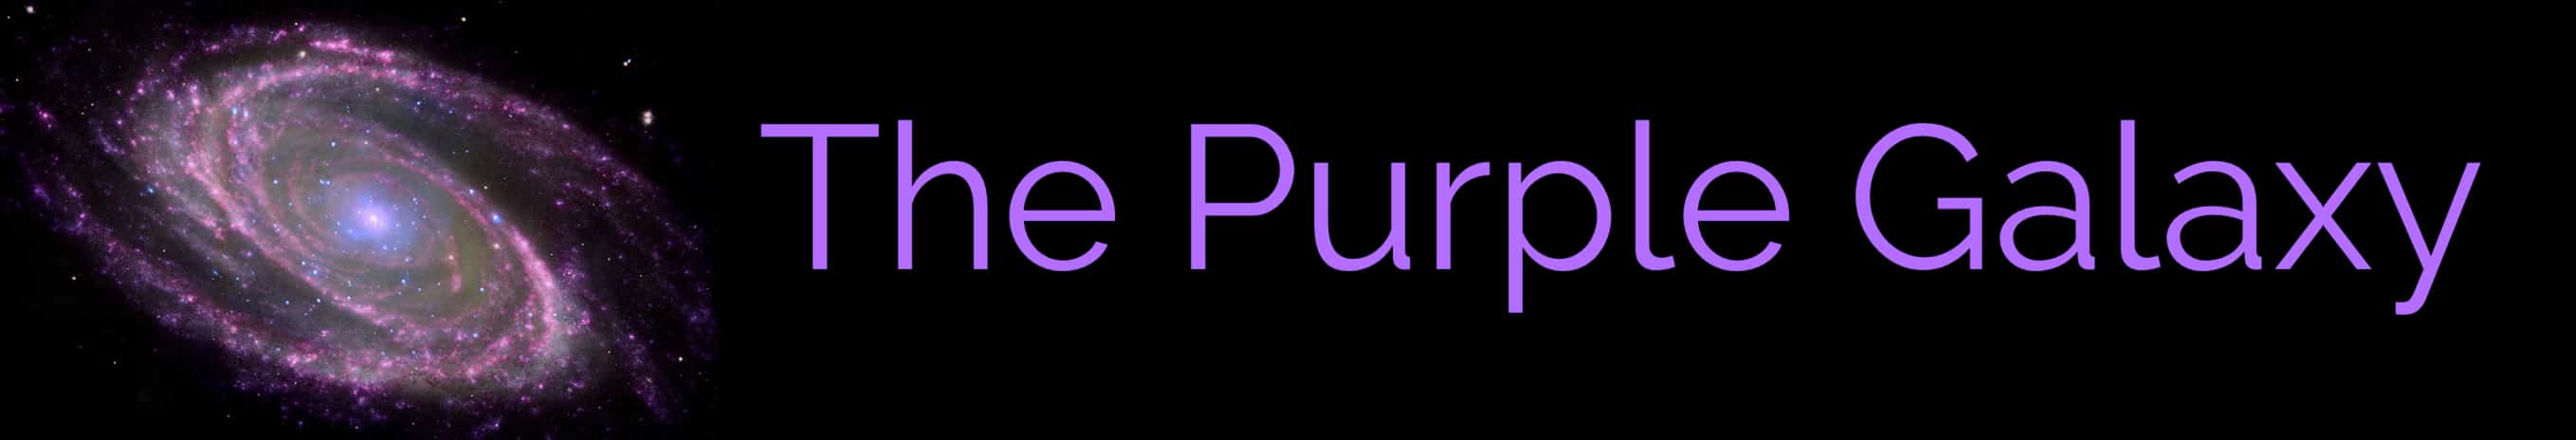 The Purple Galaxy